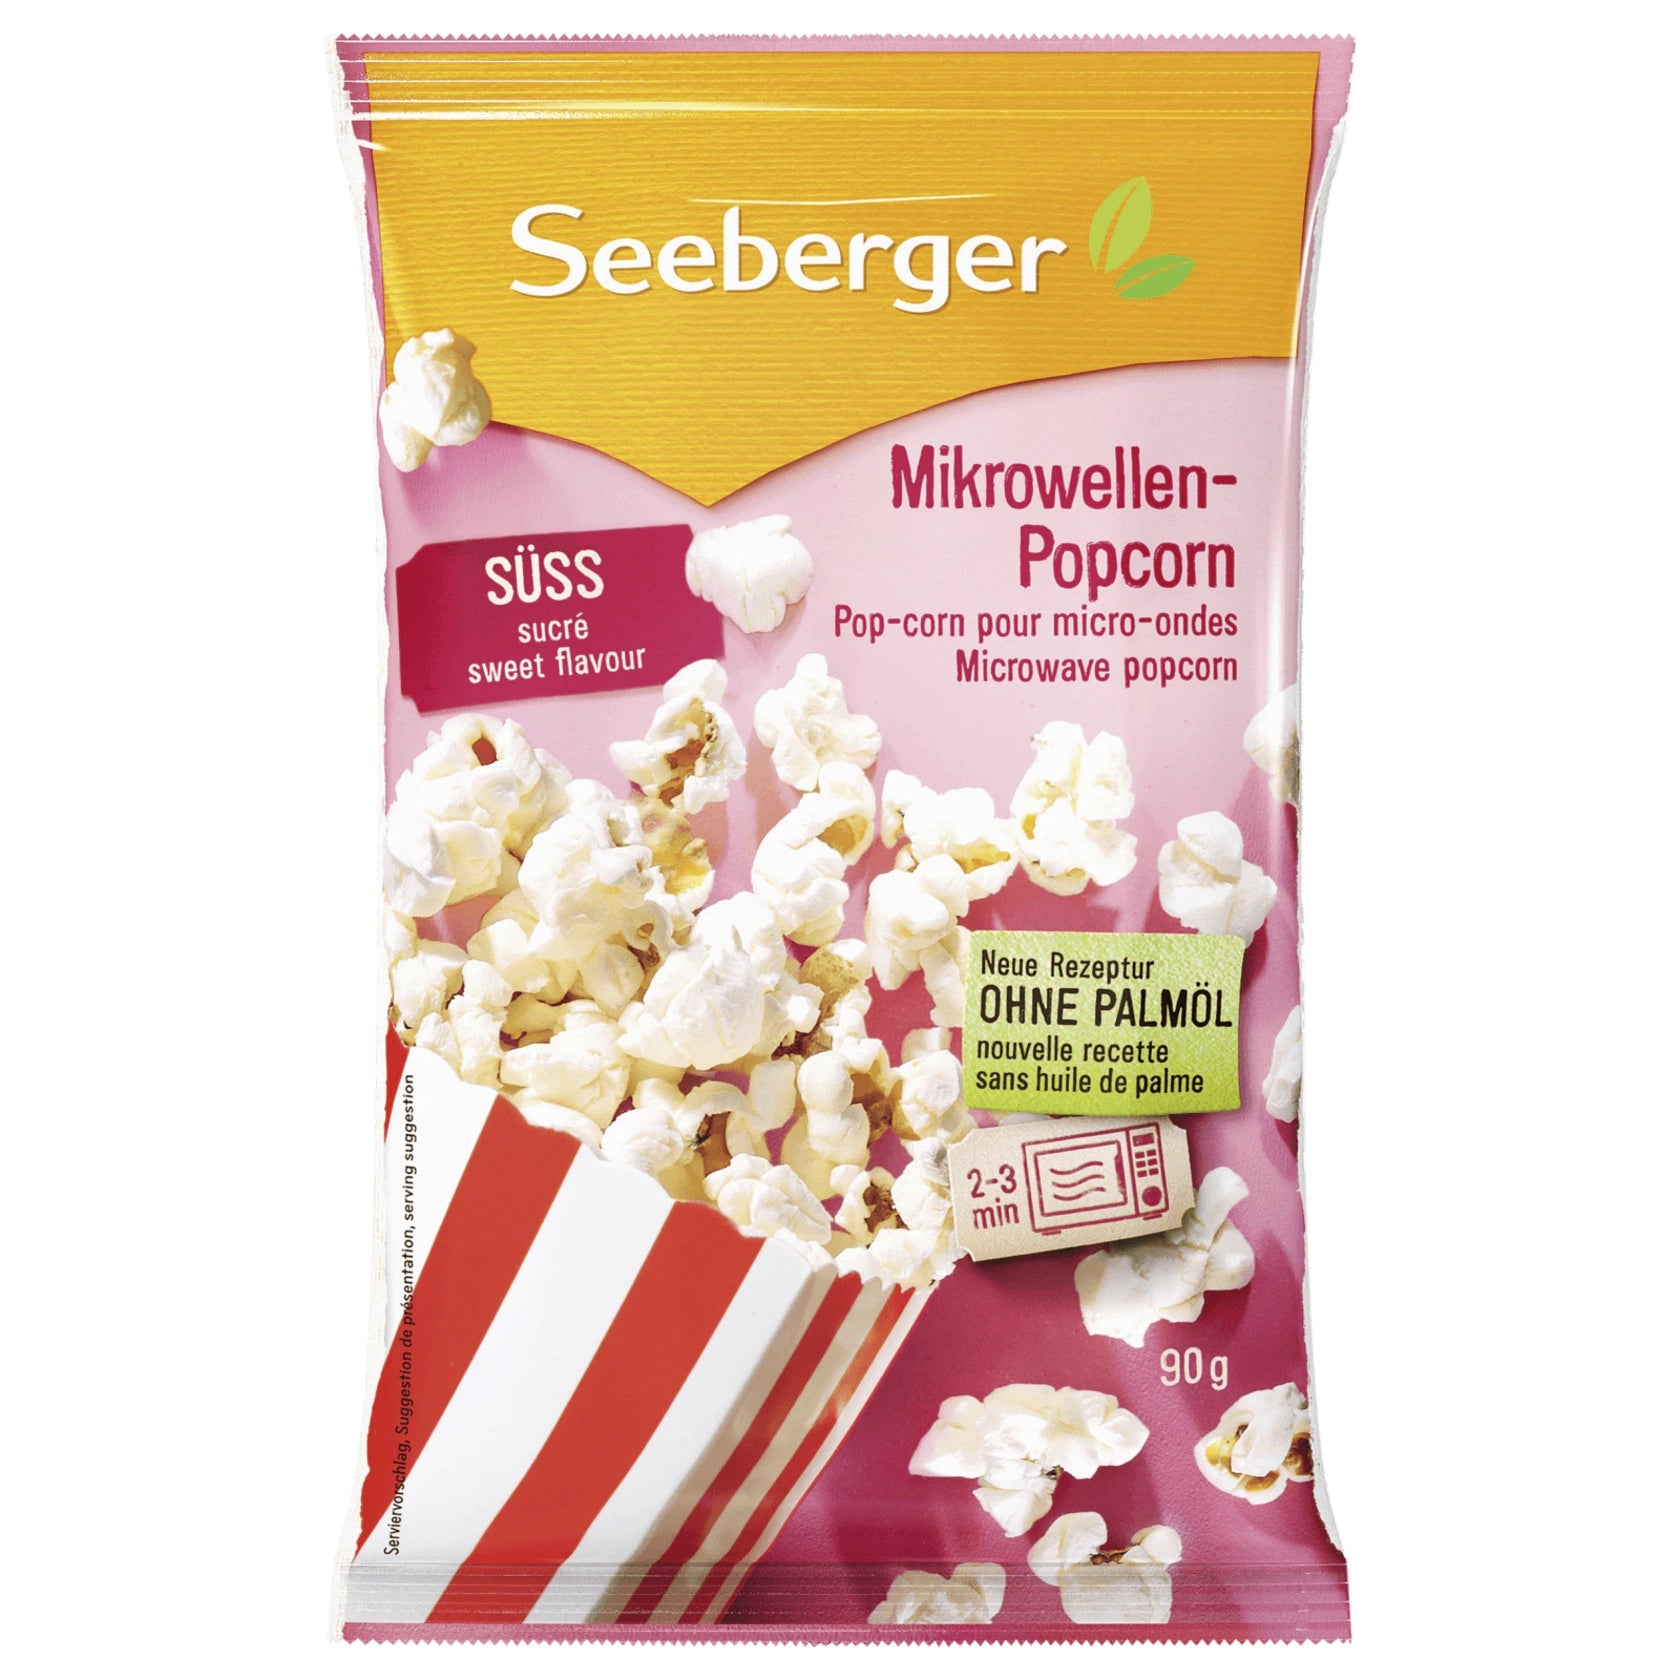 Seeberger Mikrowellen-Popcorn süss 90g - küblerGo